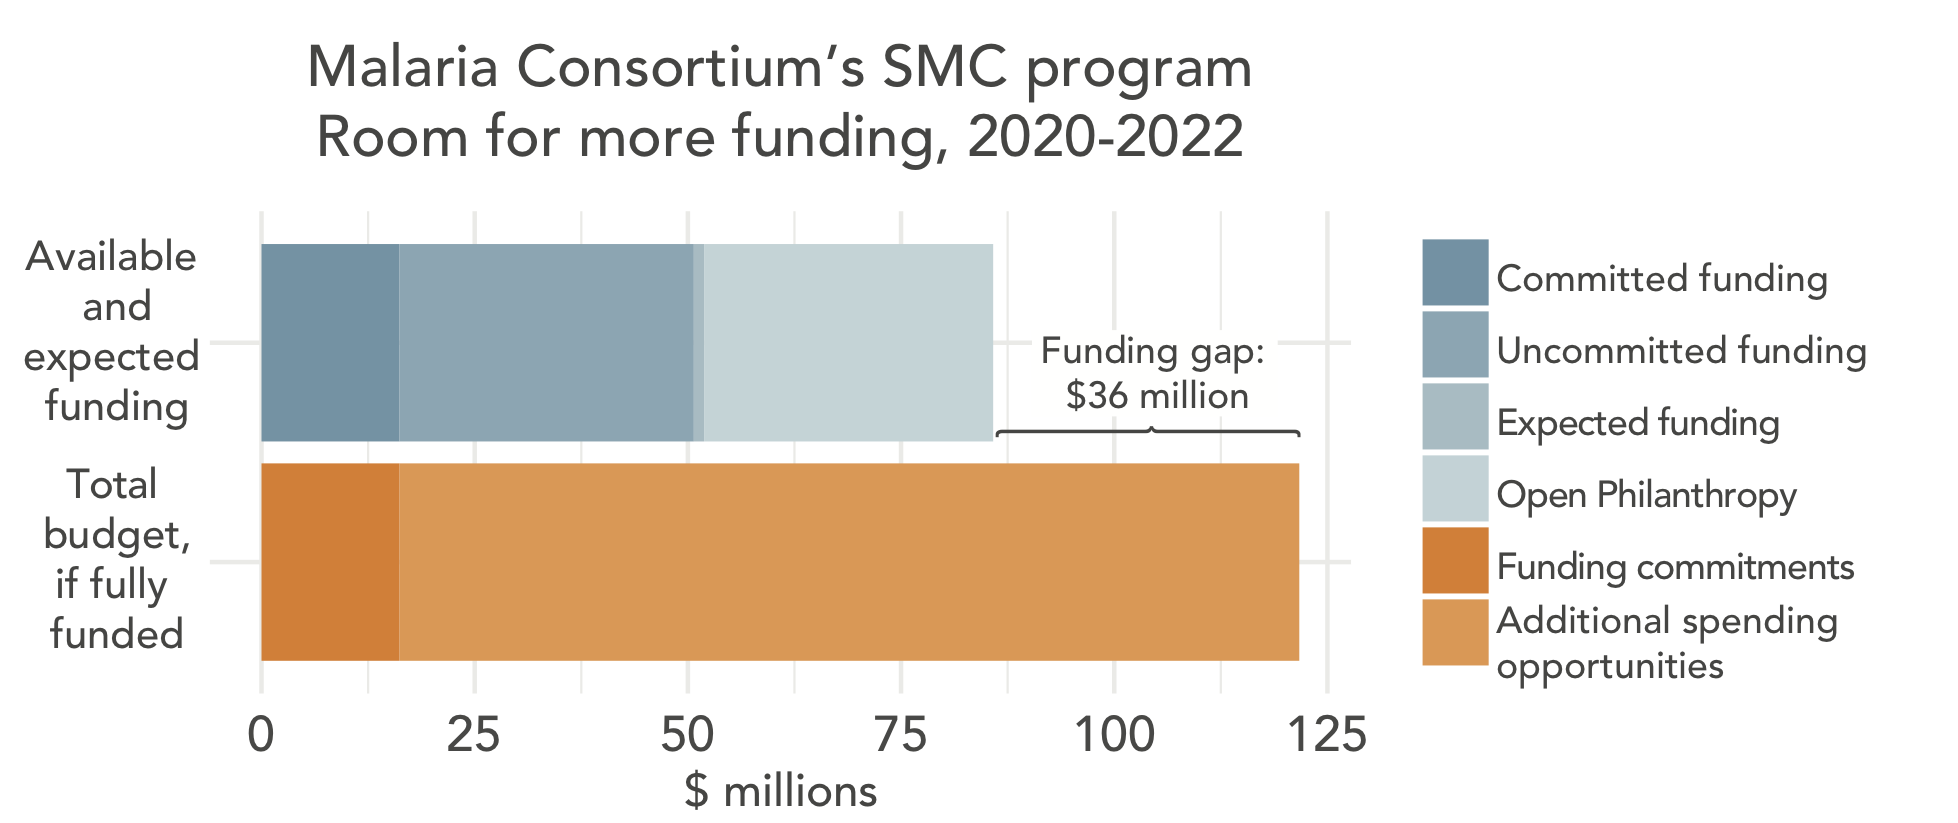 Room for more funding for Malaria Consortium's SMC program 2020-2022